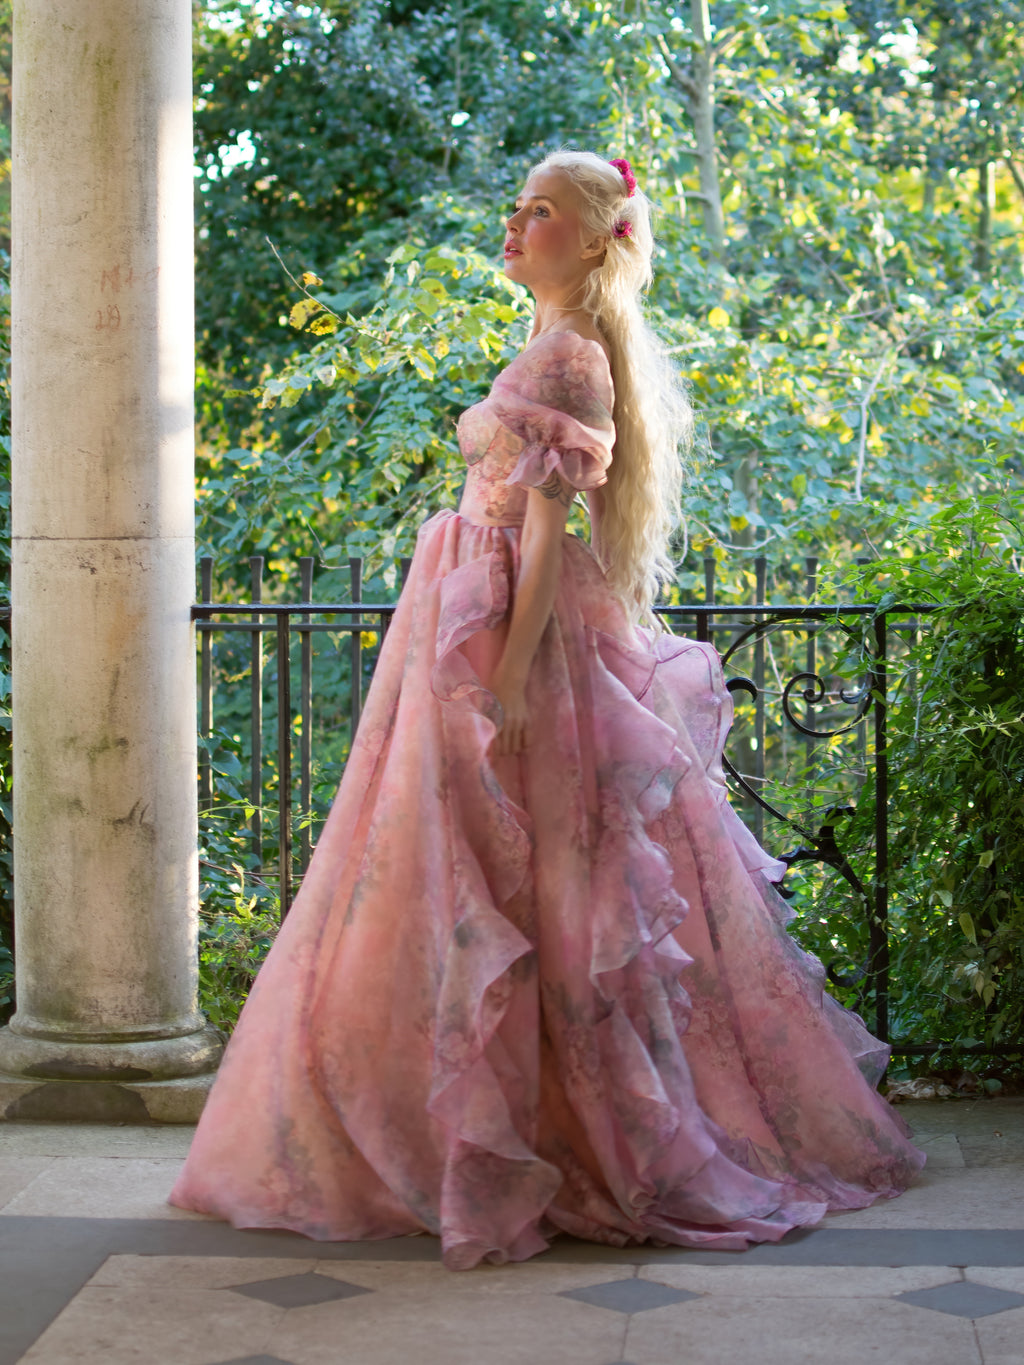 fairytale princess dresses